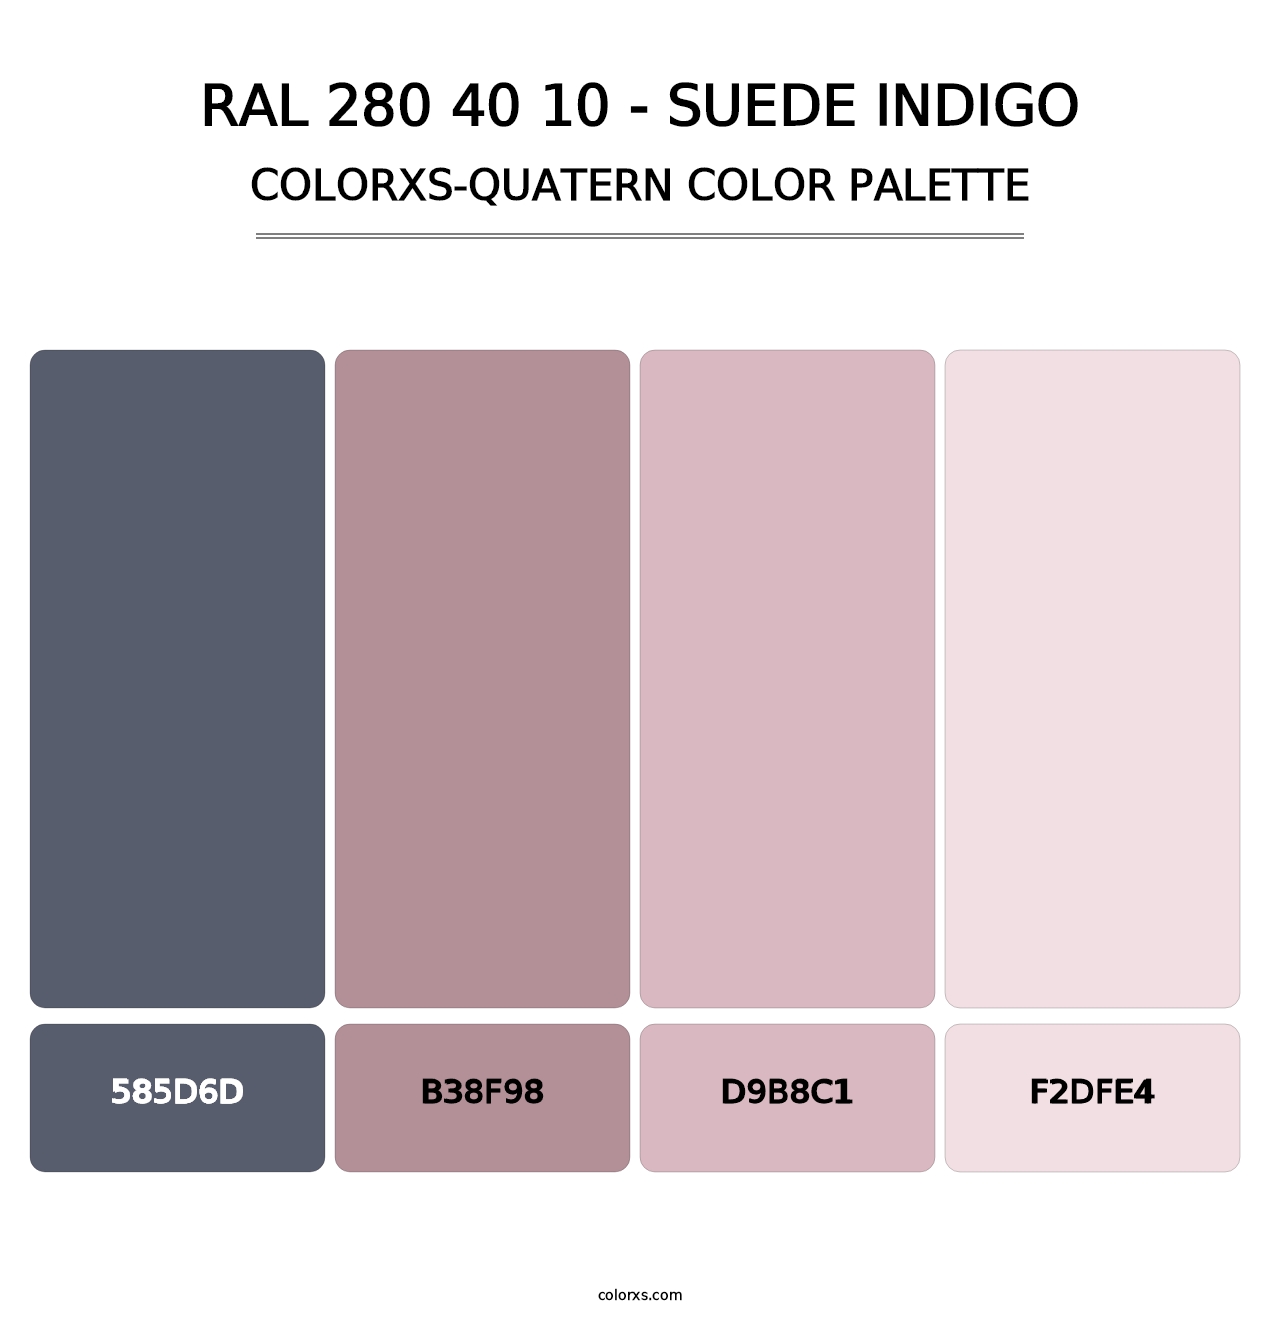 RAL 280 40 10 - Suede Indigo - Colorxs Quatern Palette